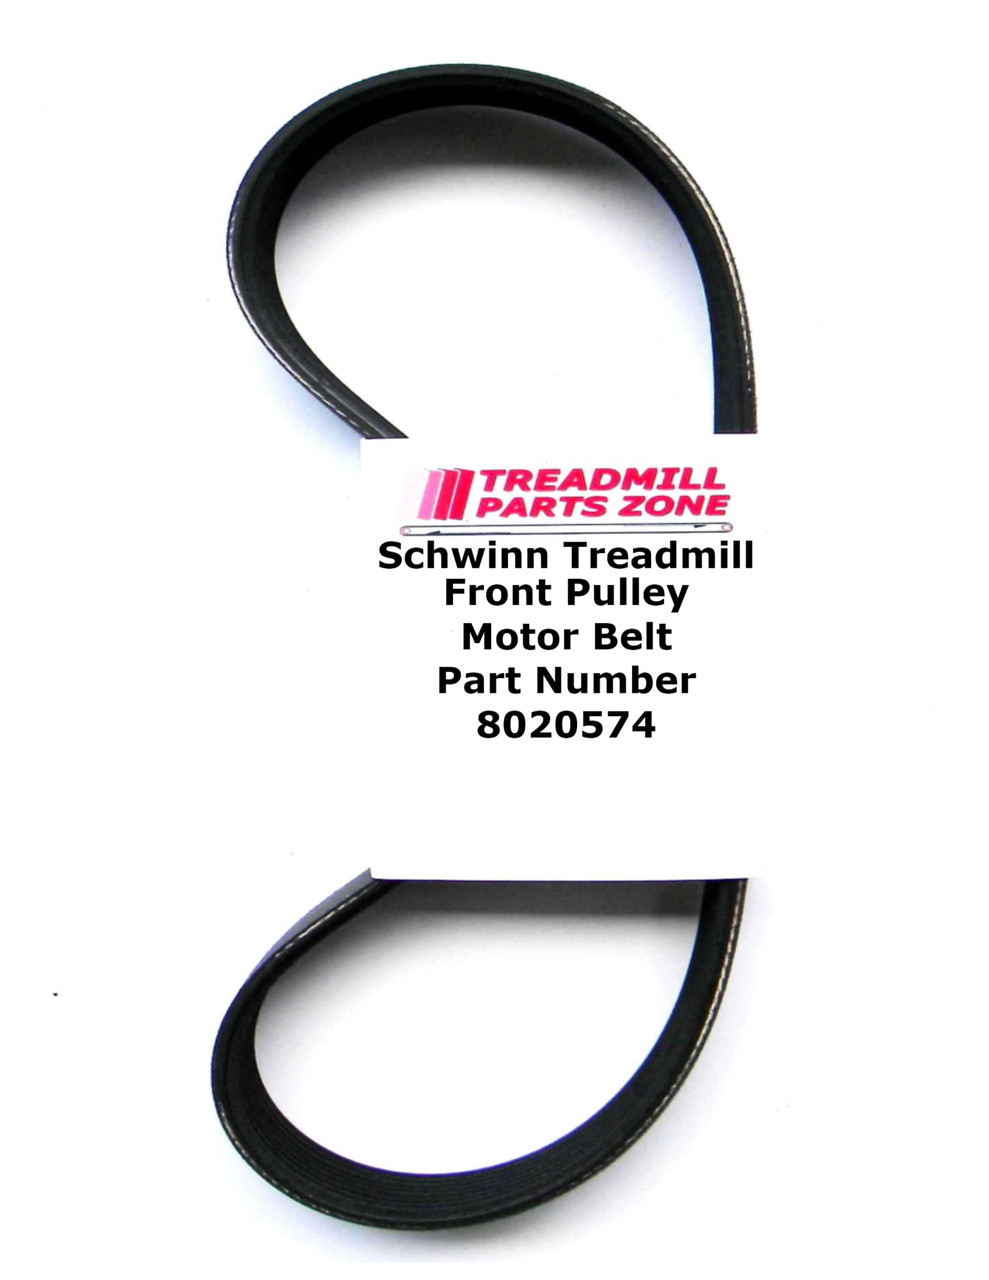 Schwinn Treadmill Front Pulley Motor Belt Part Number 8020574